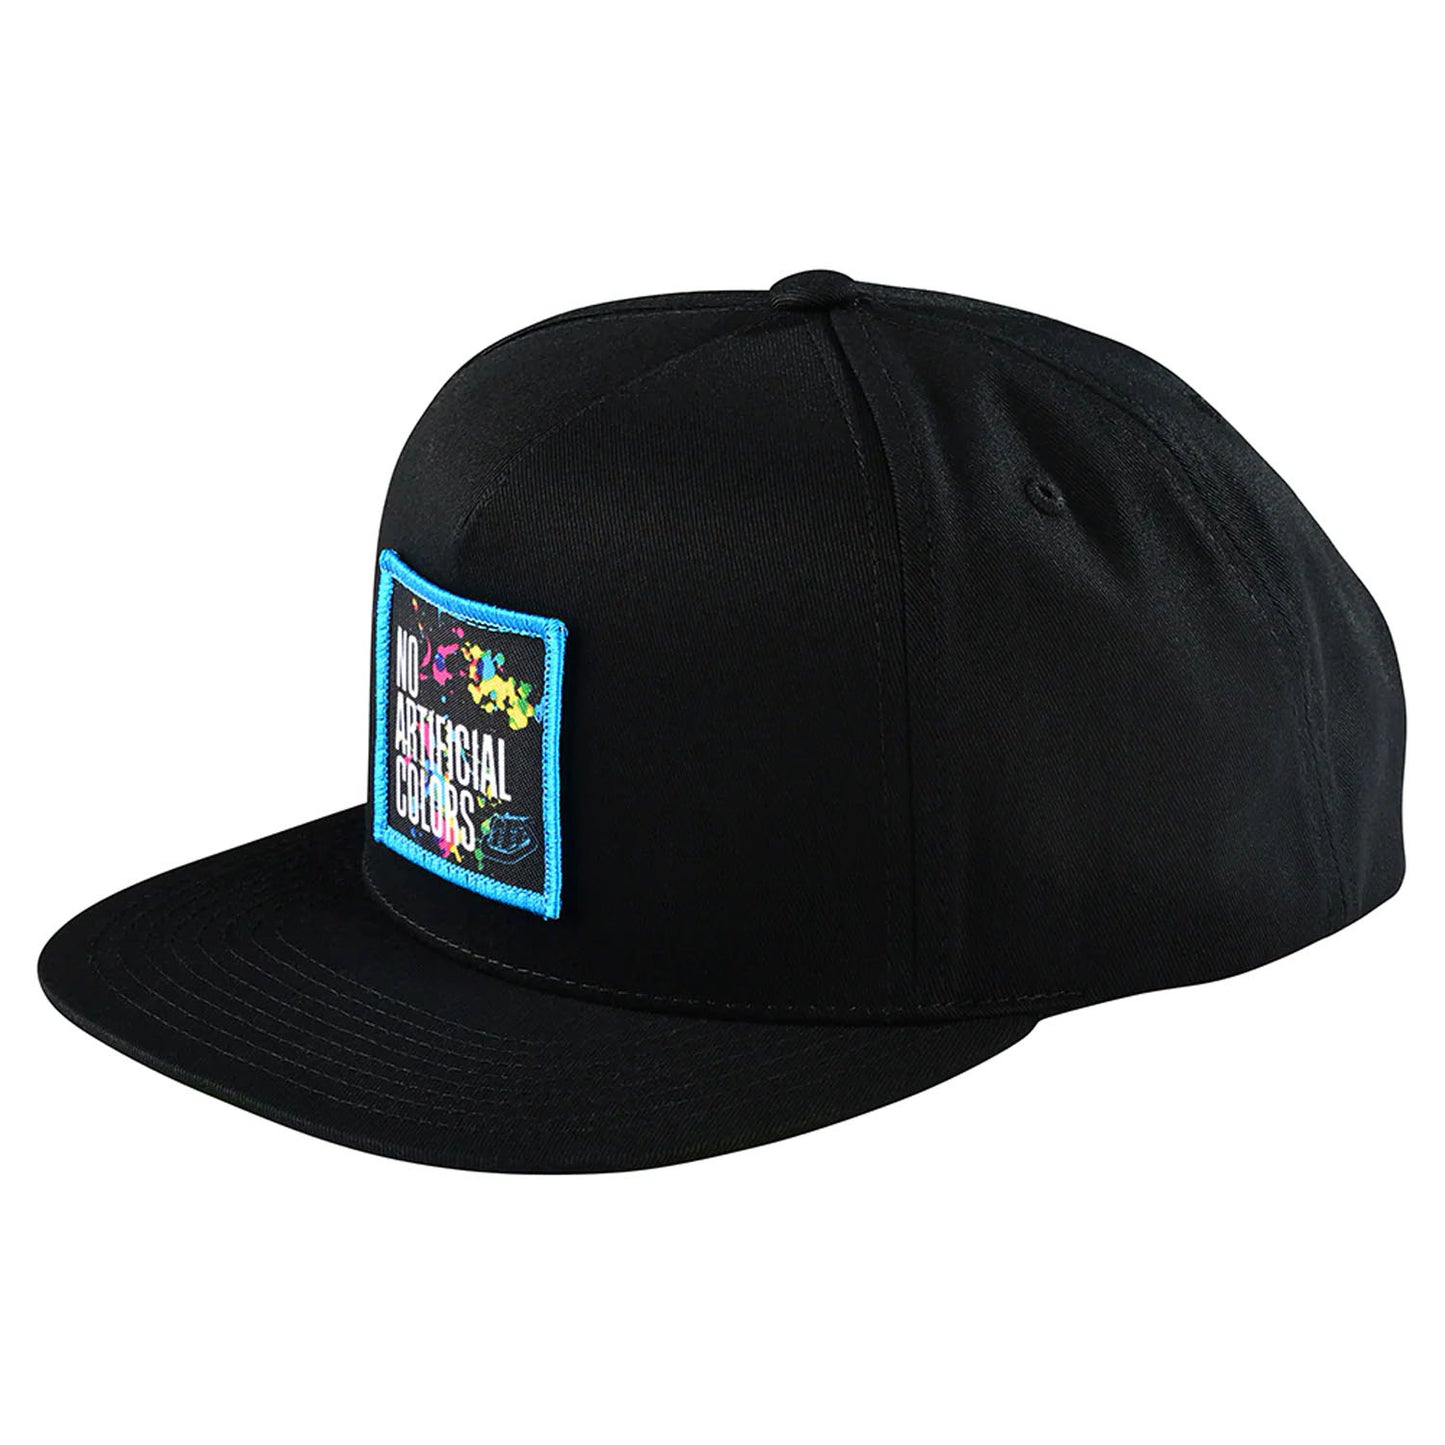 Troy Lee Designs No Artificial Colors Snapback Hat Black - Troy Lee Designs Hats